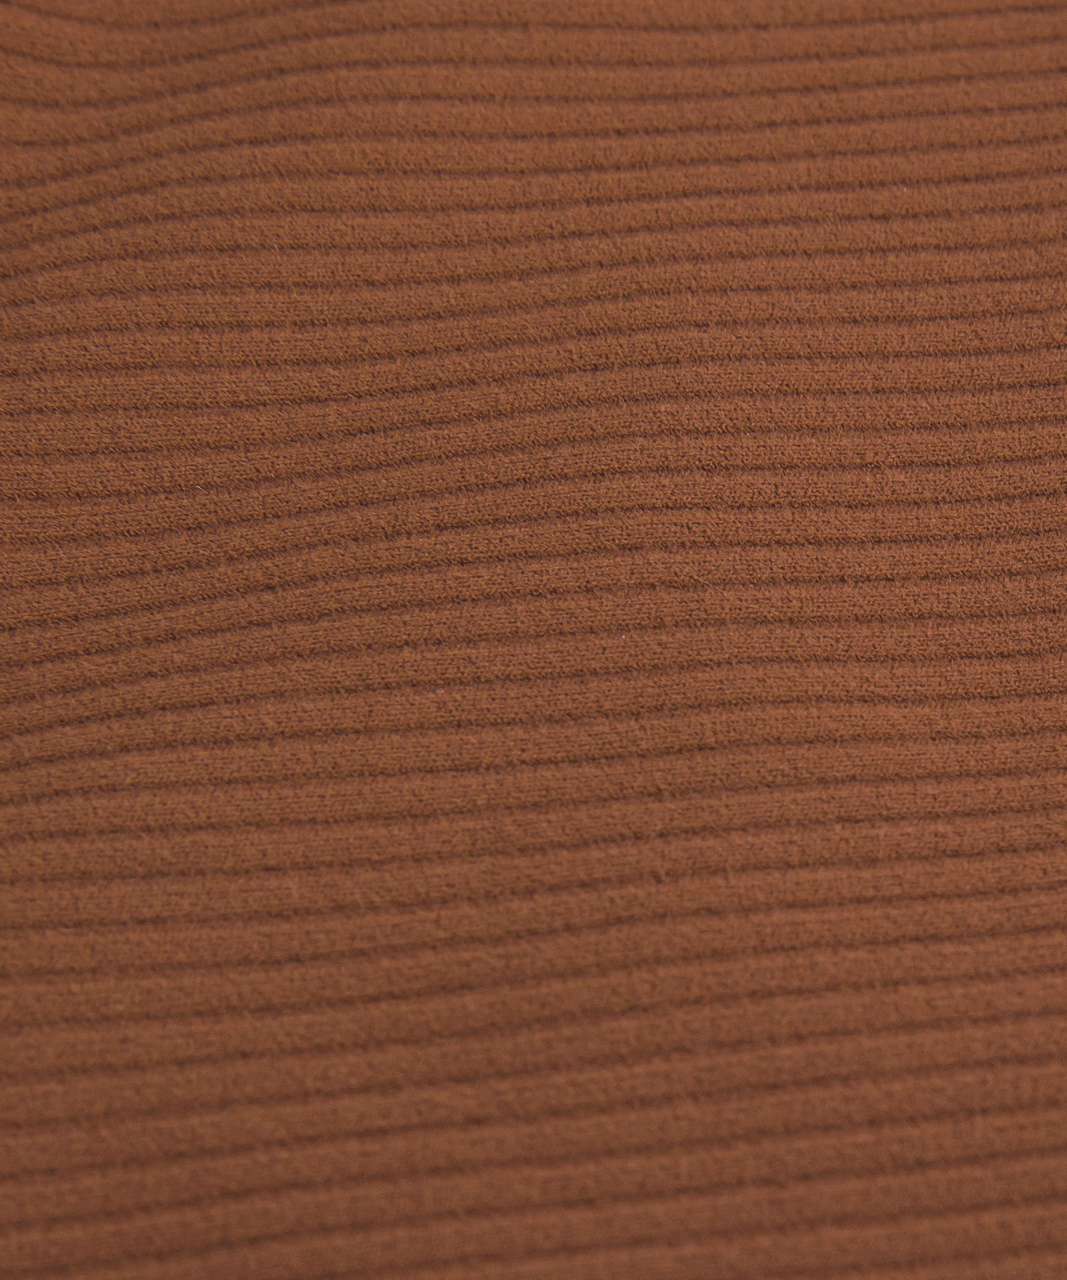 Lululemon Ribbed Nulu Cropped Define Jacket - Roasted Brown